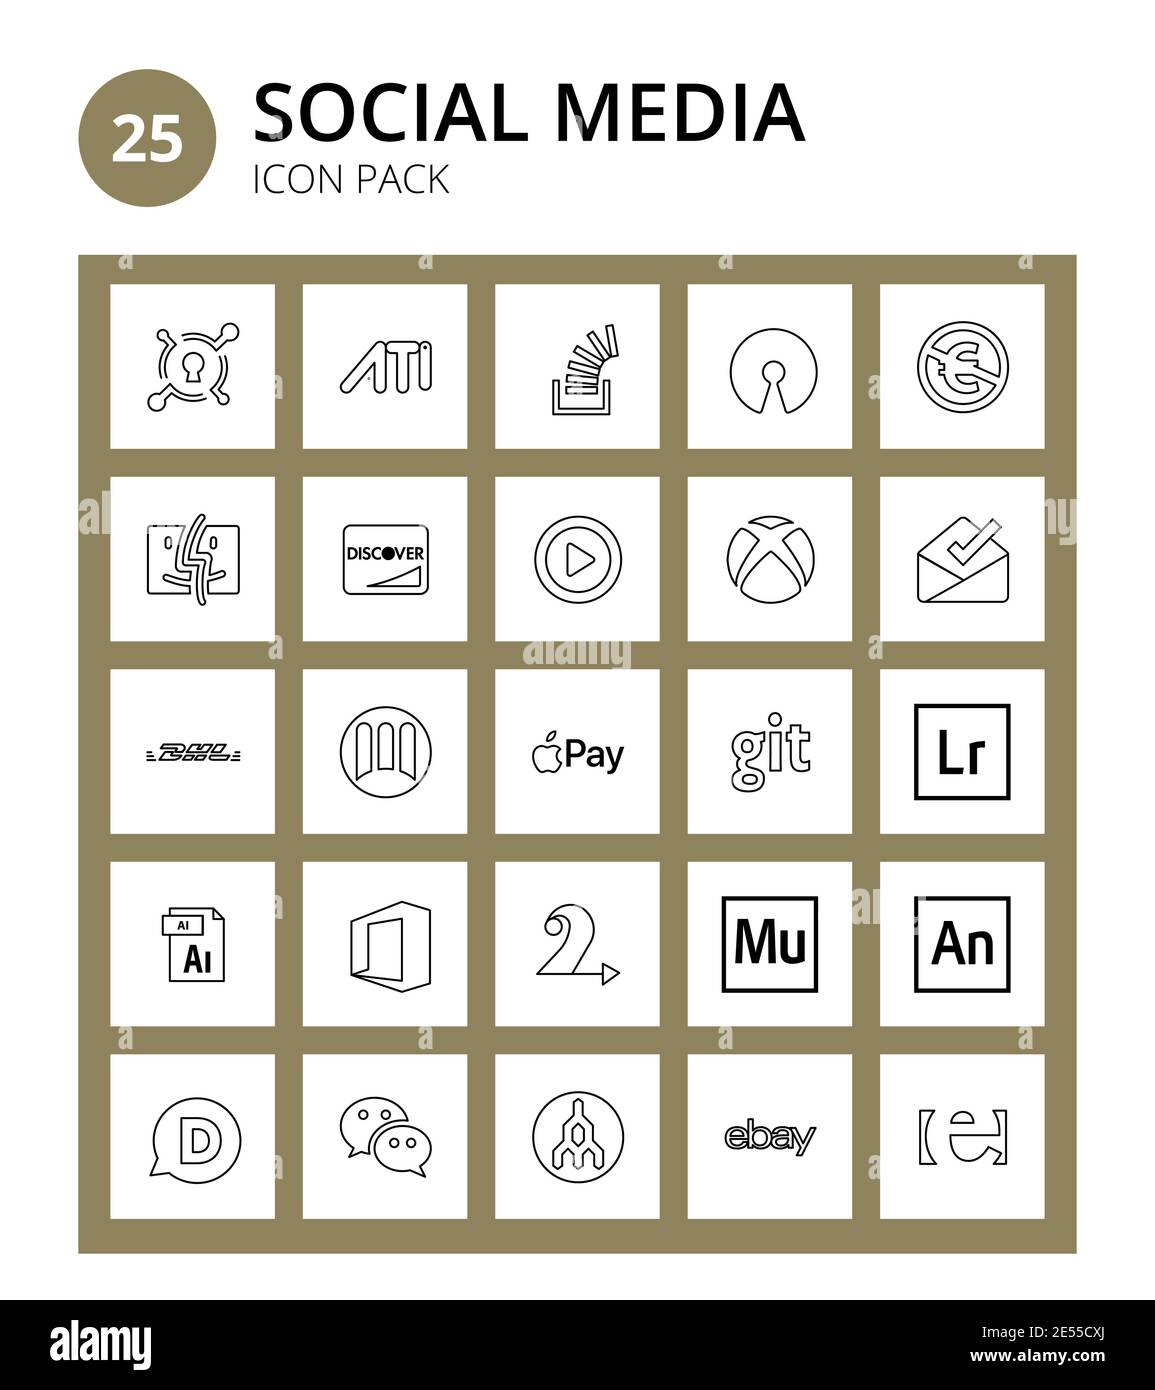 Social Media 25 icons mizuni, inbox, nc, xbox, credit card Editable Vector Design Elements Stock Vector